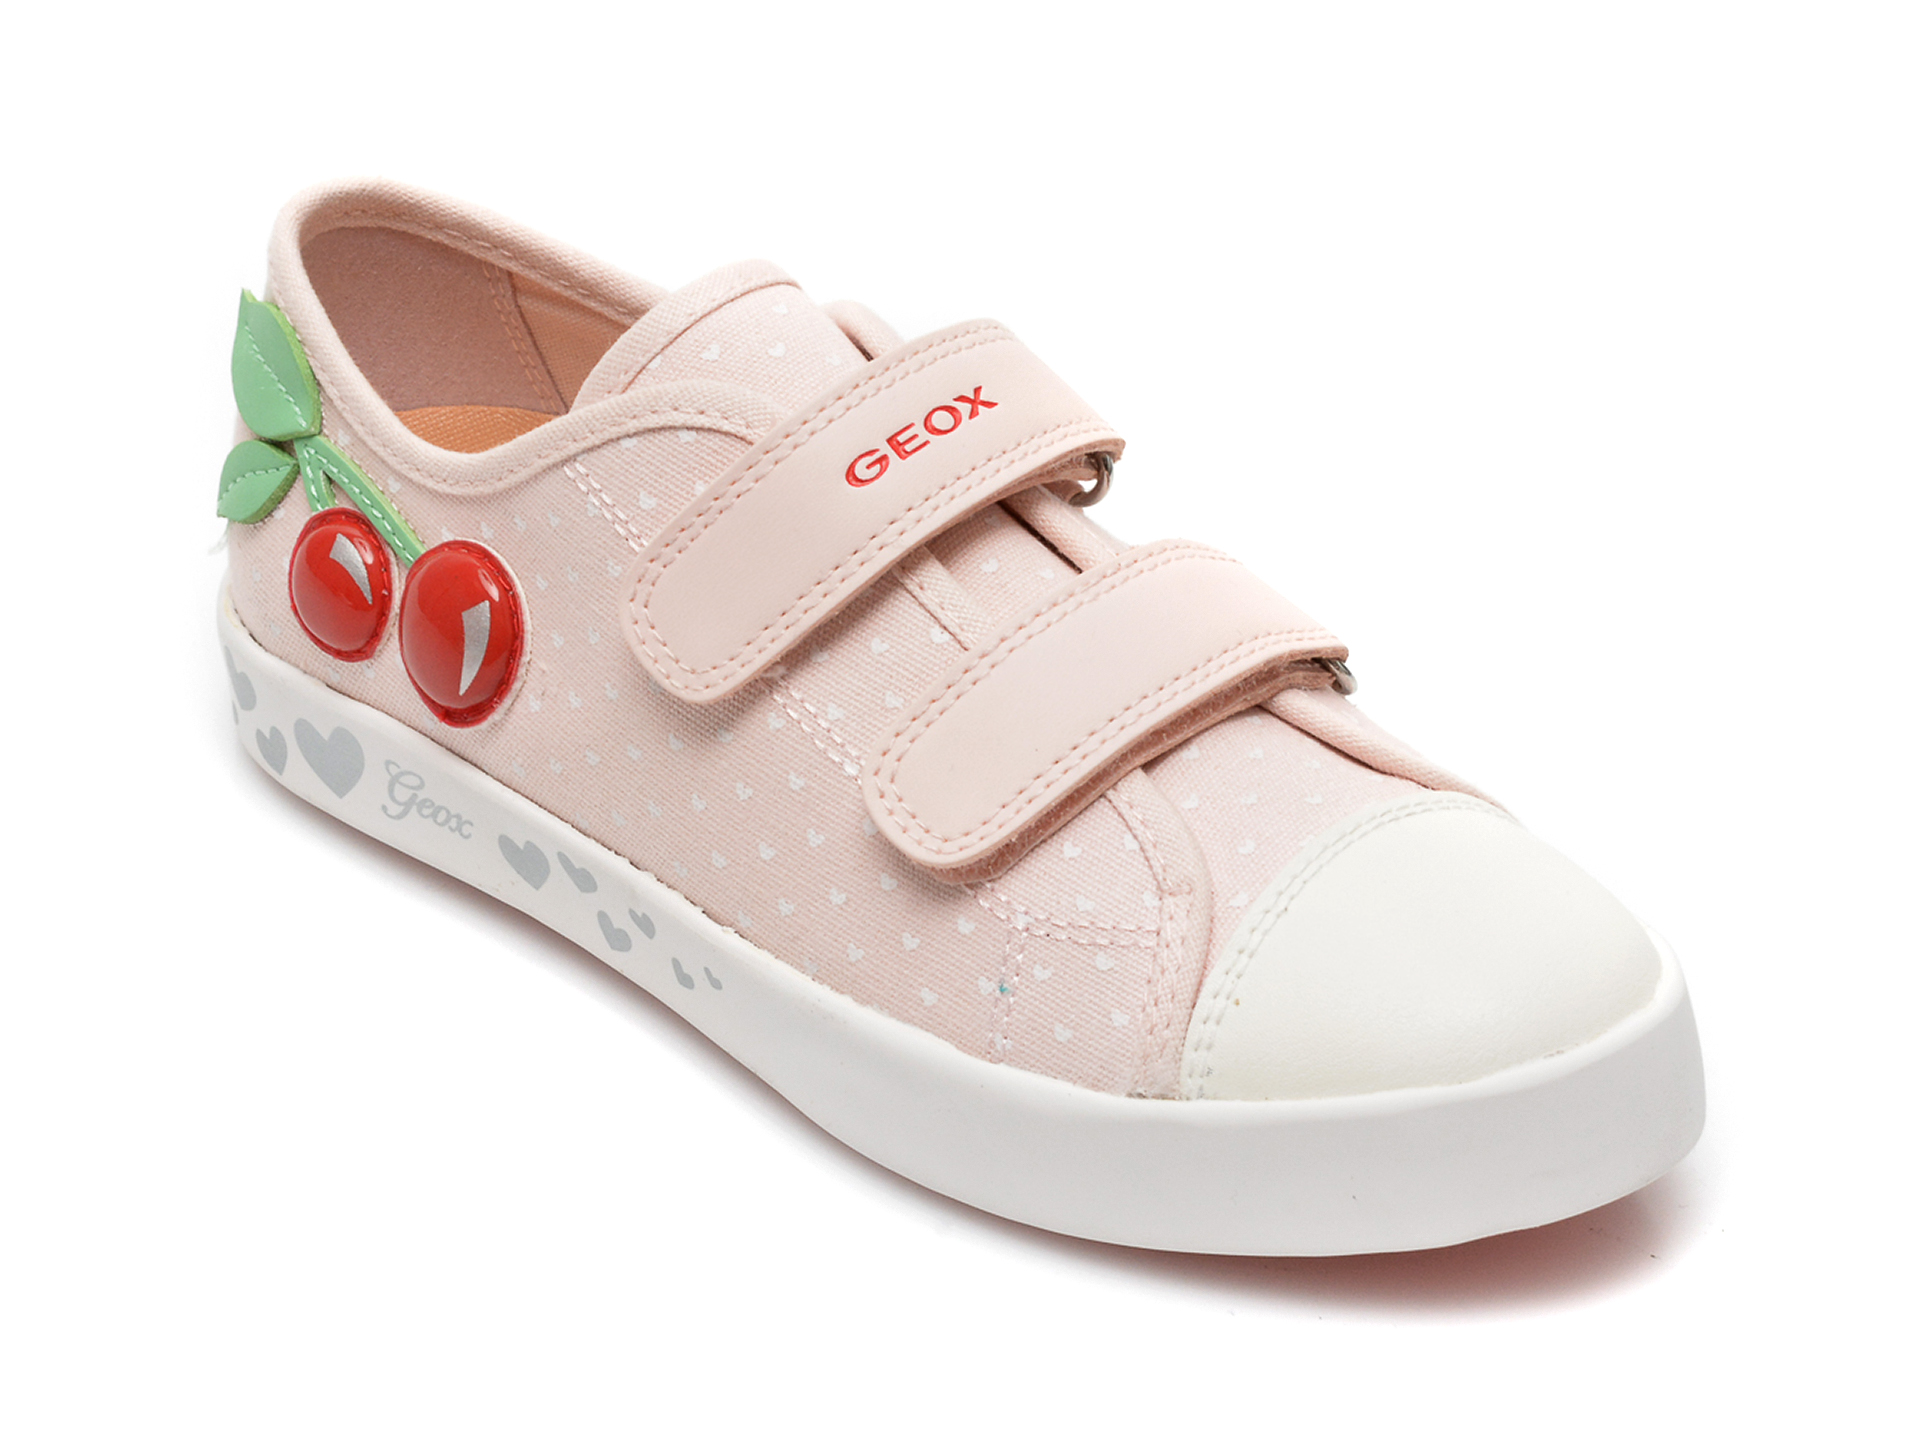 Pantofi sport GEOX roz, J2504A, din material textil si piele ecologica /copii/incaltaminte